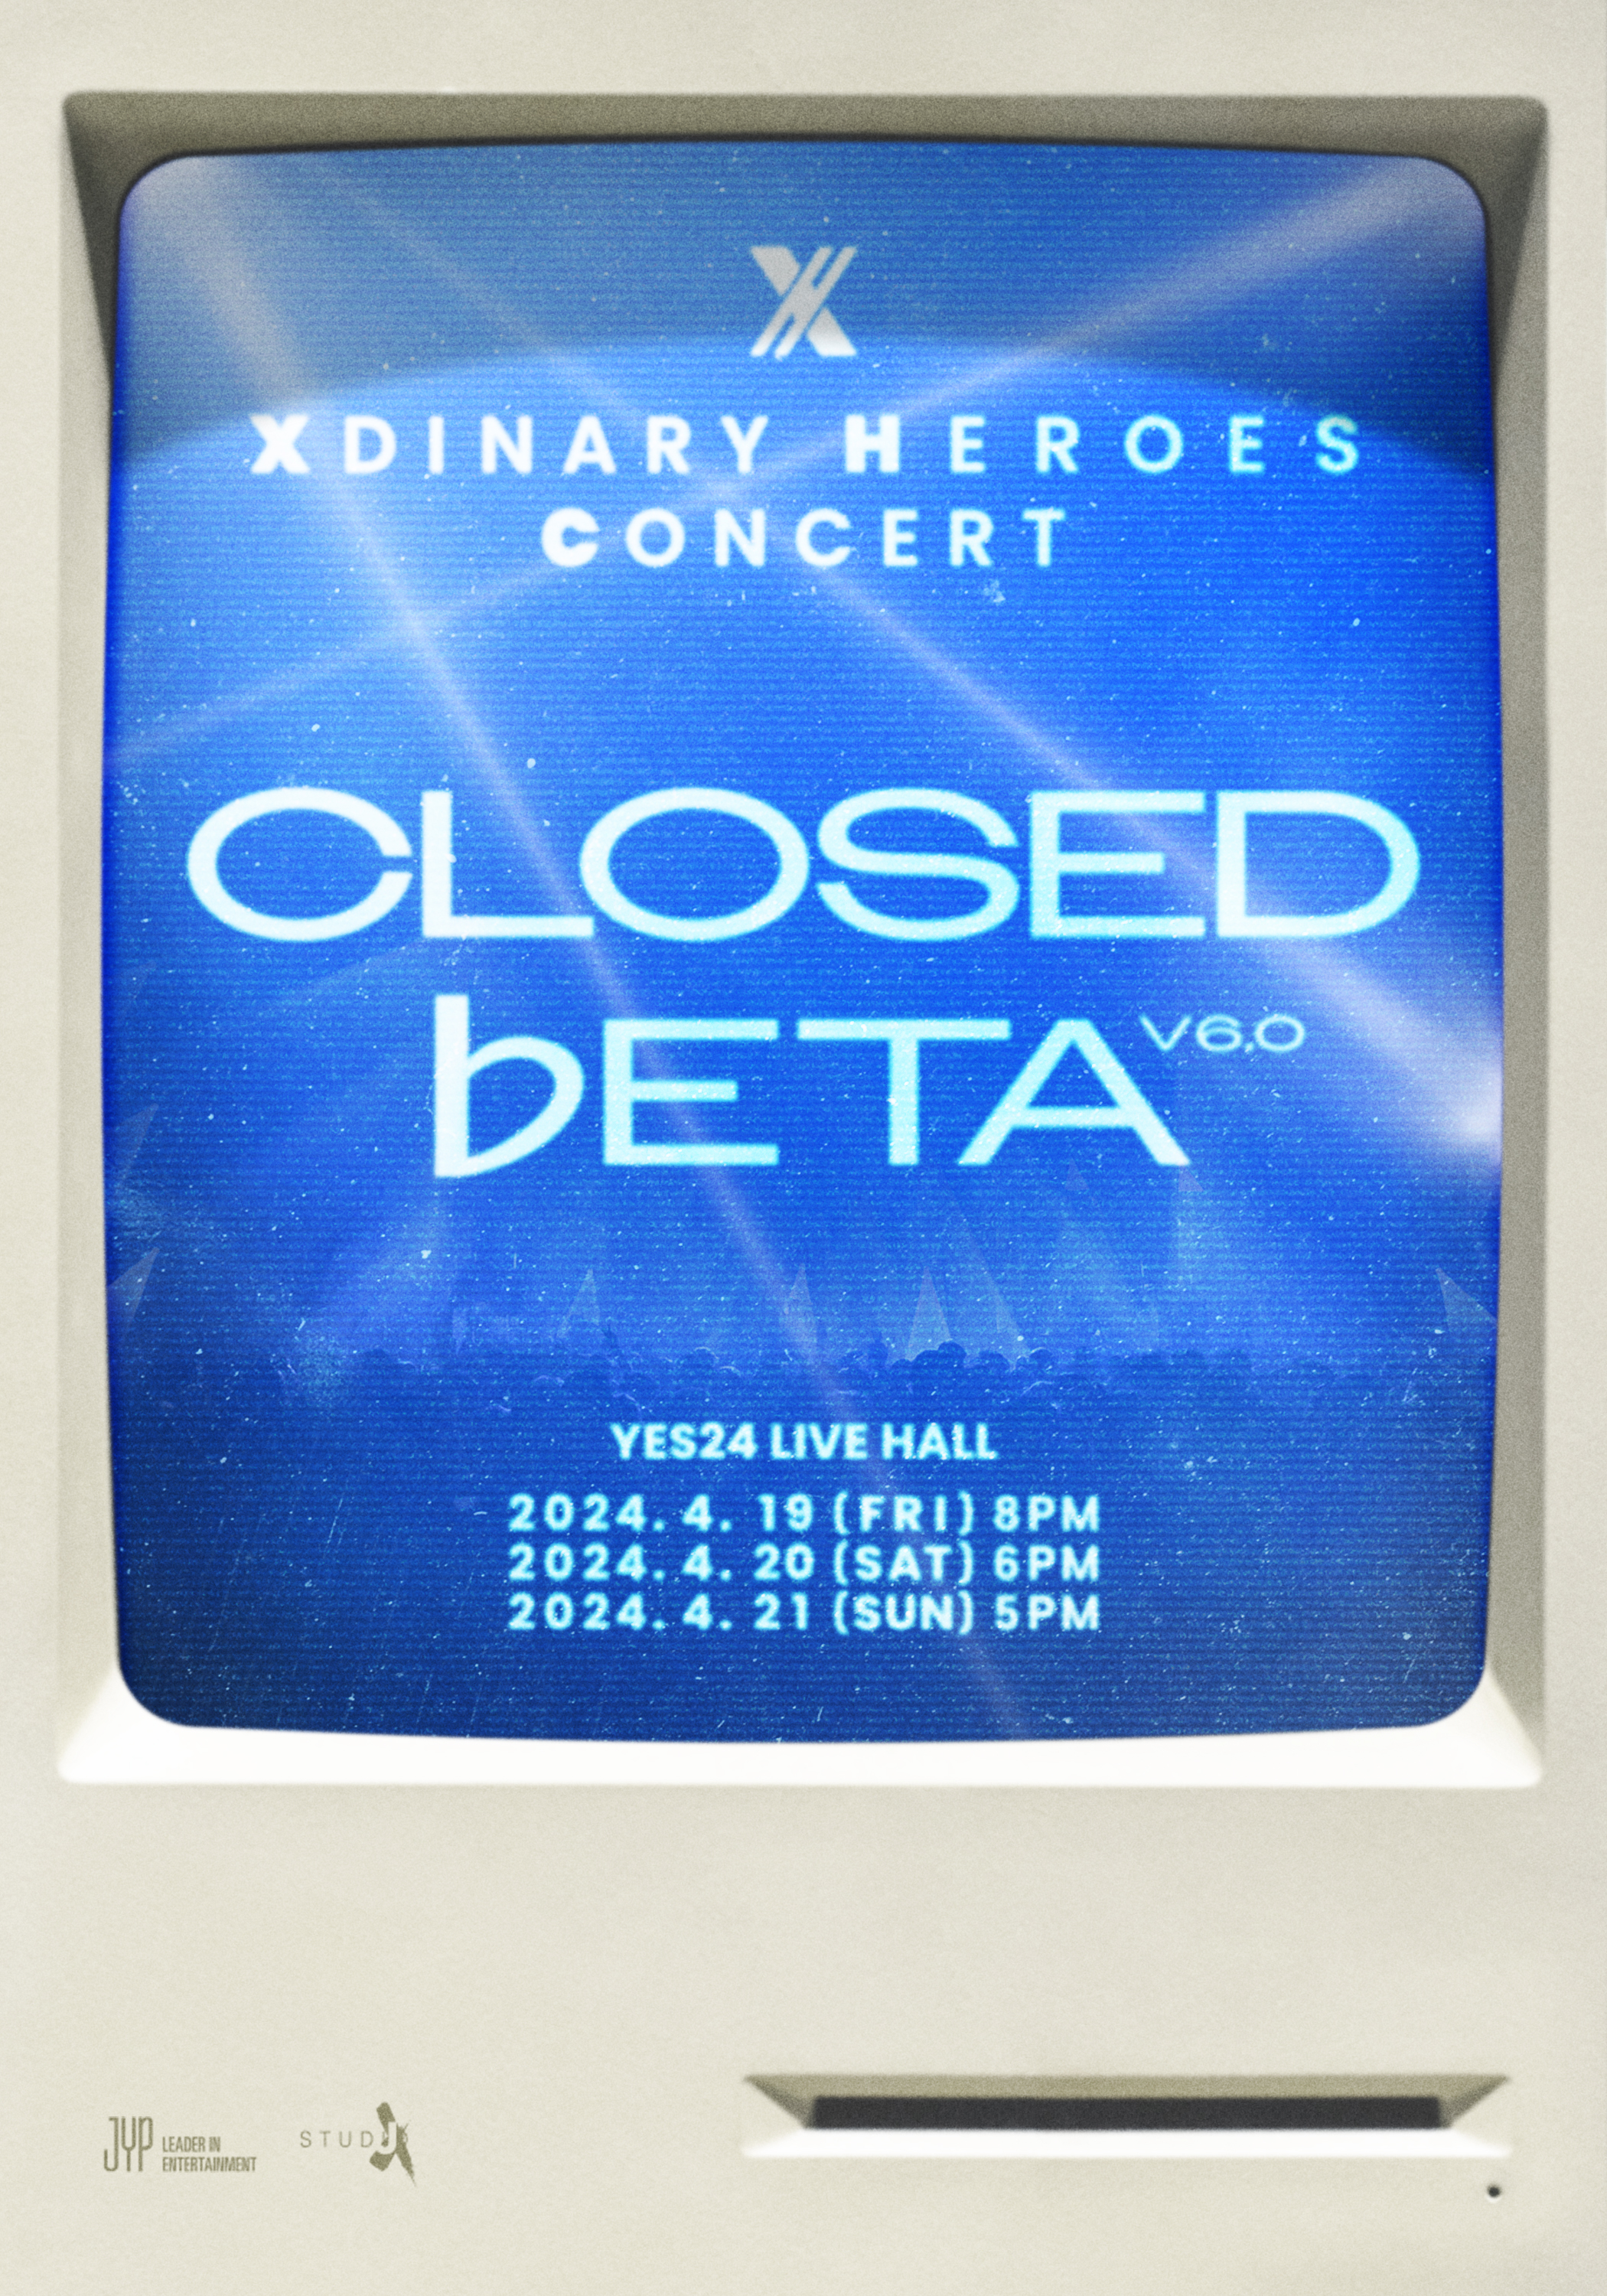 FANS - Xdinary Heroes Concert <Closed ♭eta: v6.0> Ticket Open Notice